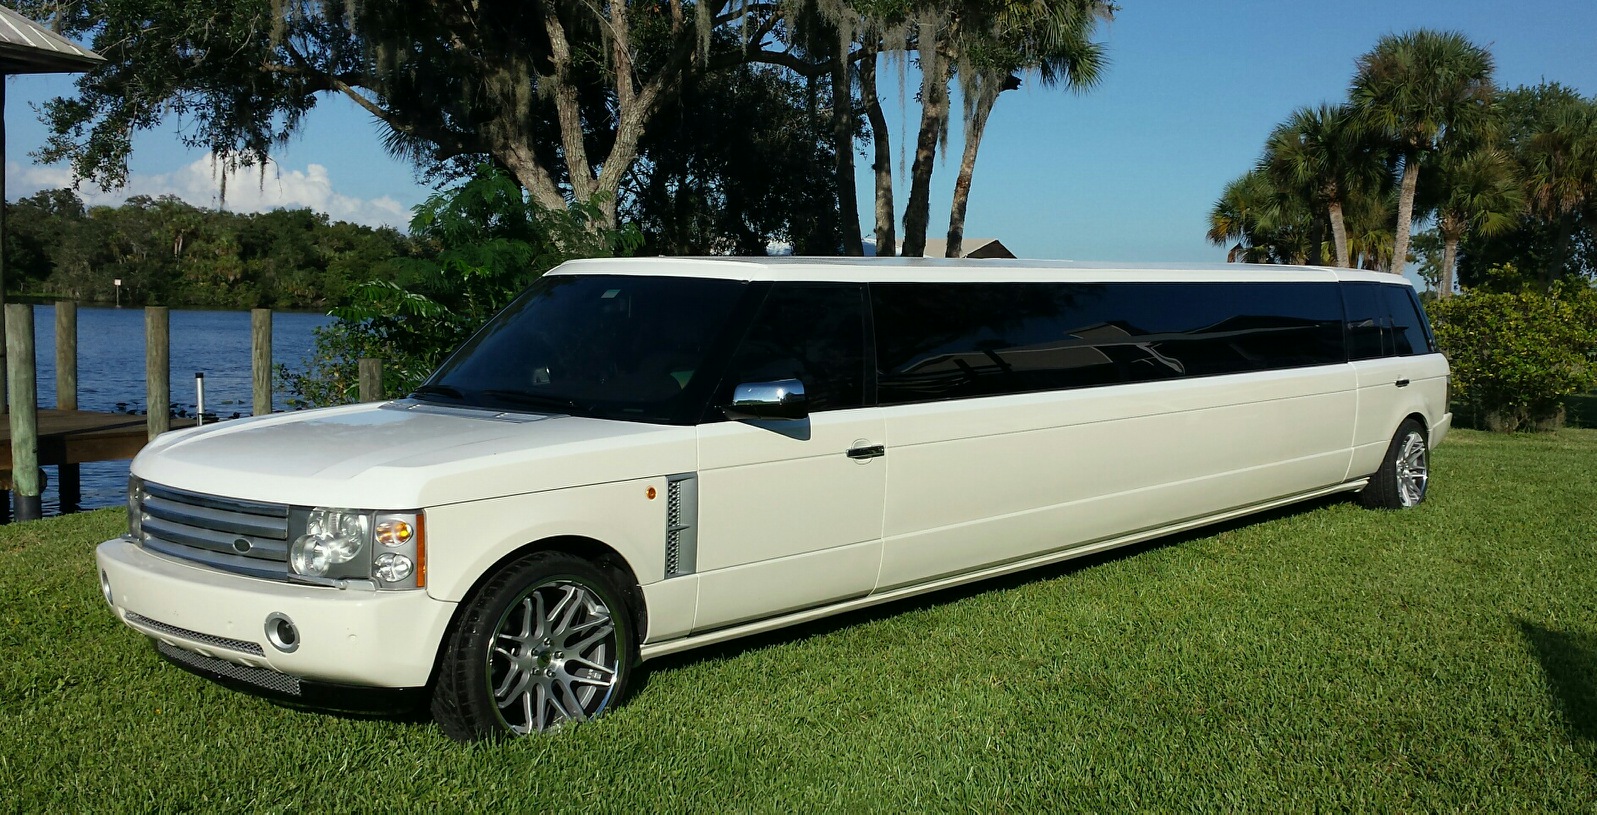 Range Rover Tinted Windows Florida